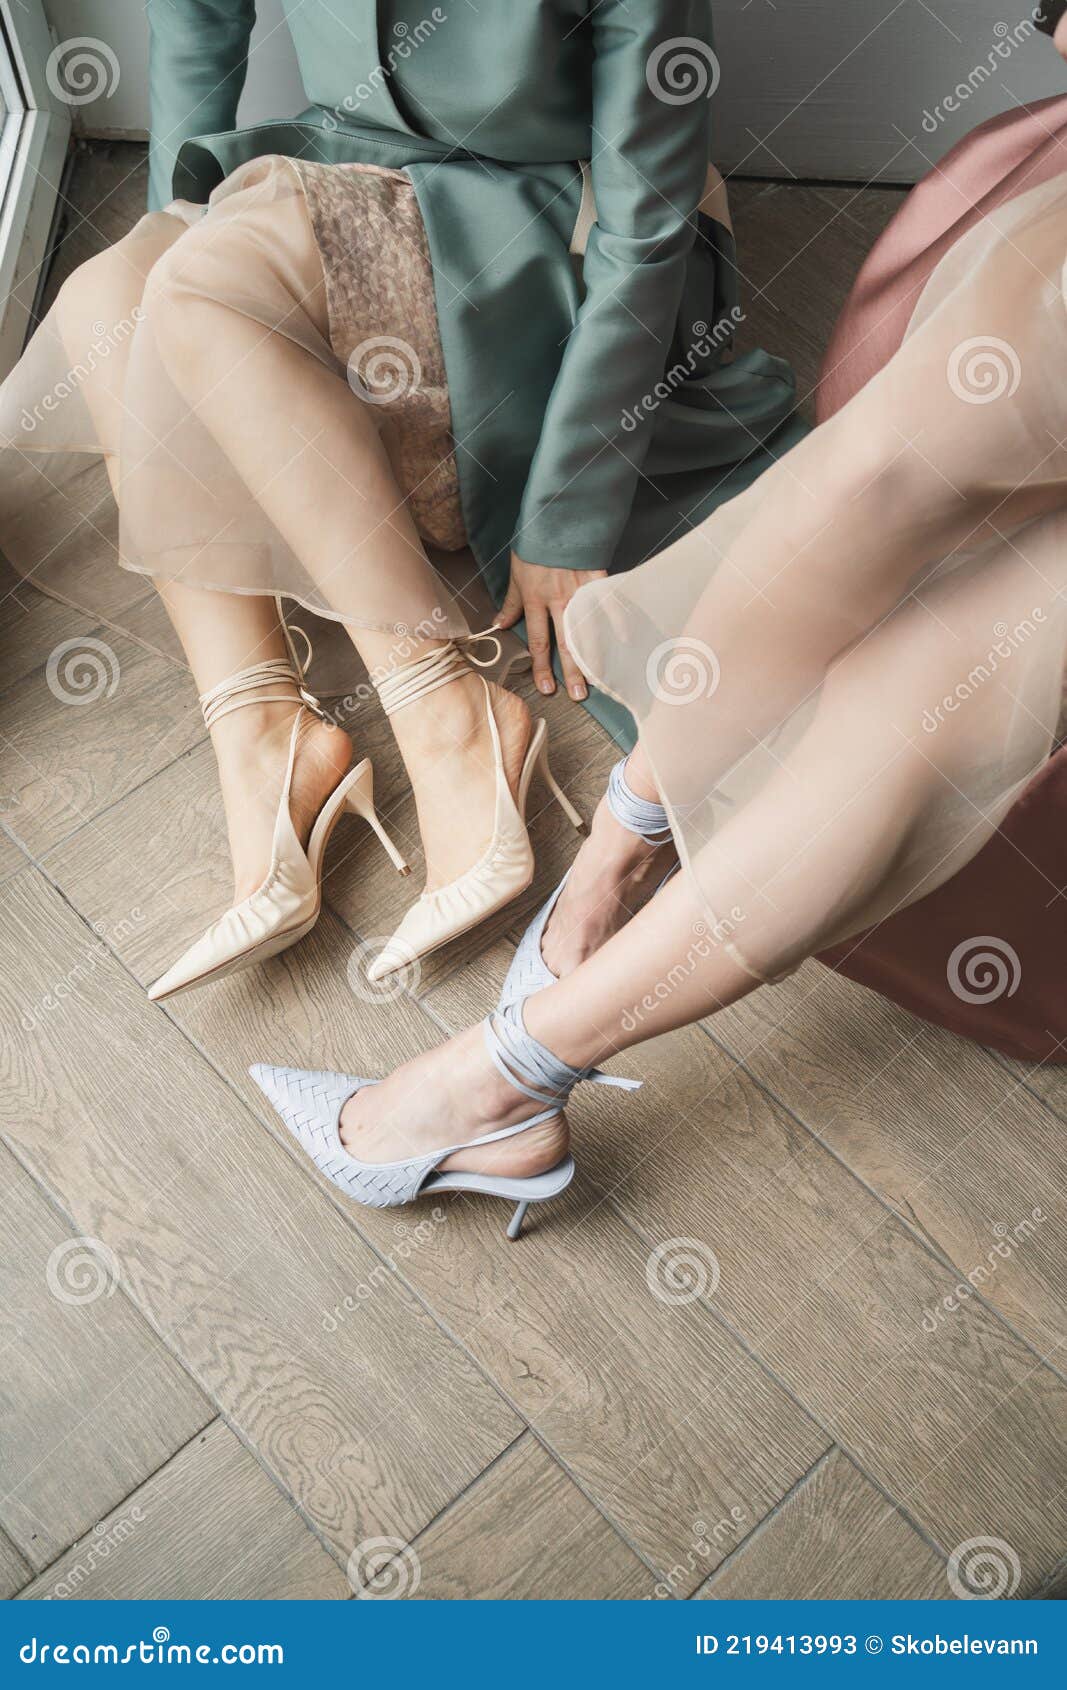 Sexy Feet In Heels